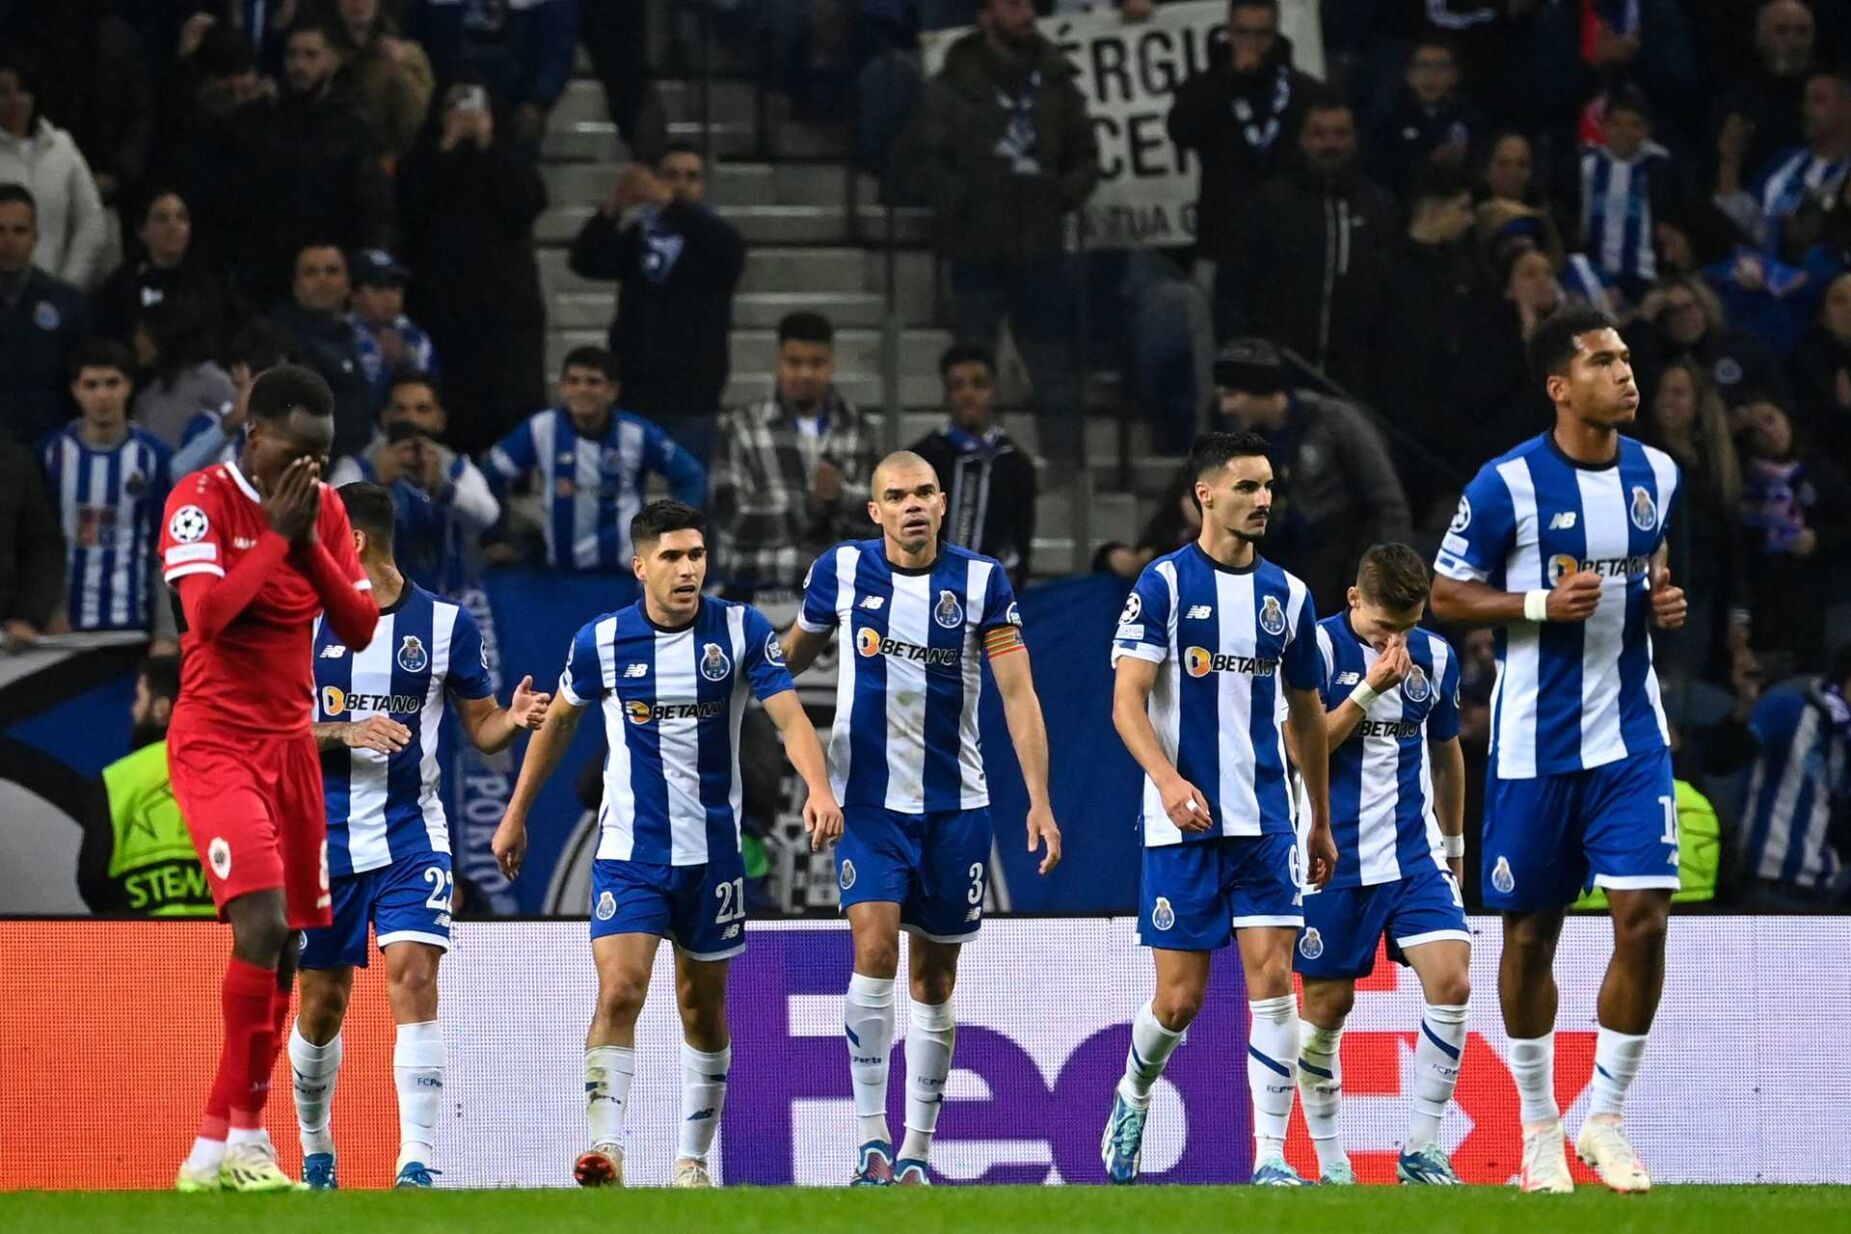 Champions: Barcelona, Shakhtar e Antuérpia no grupo do FC Porto